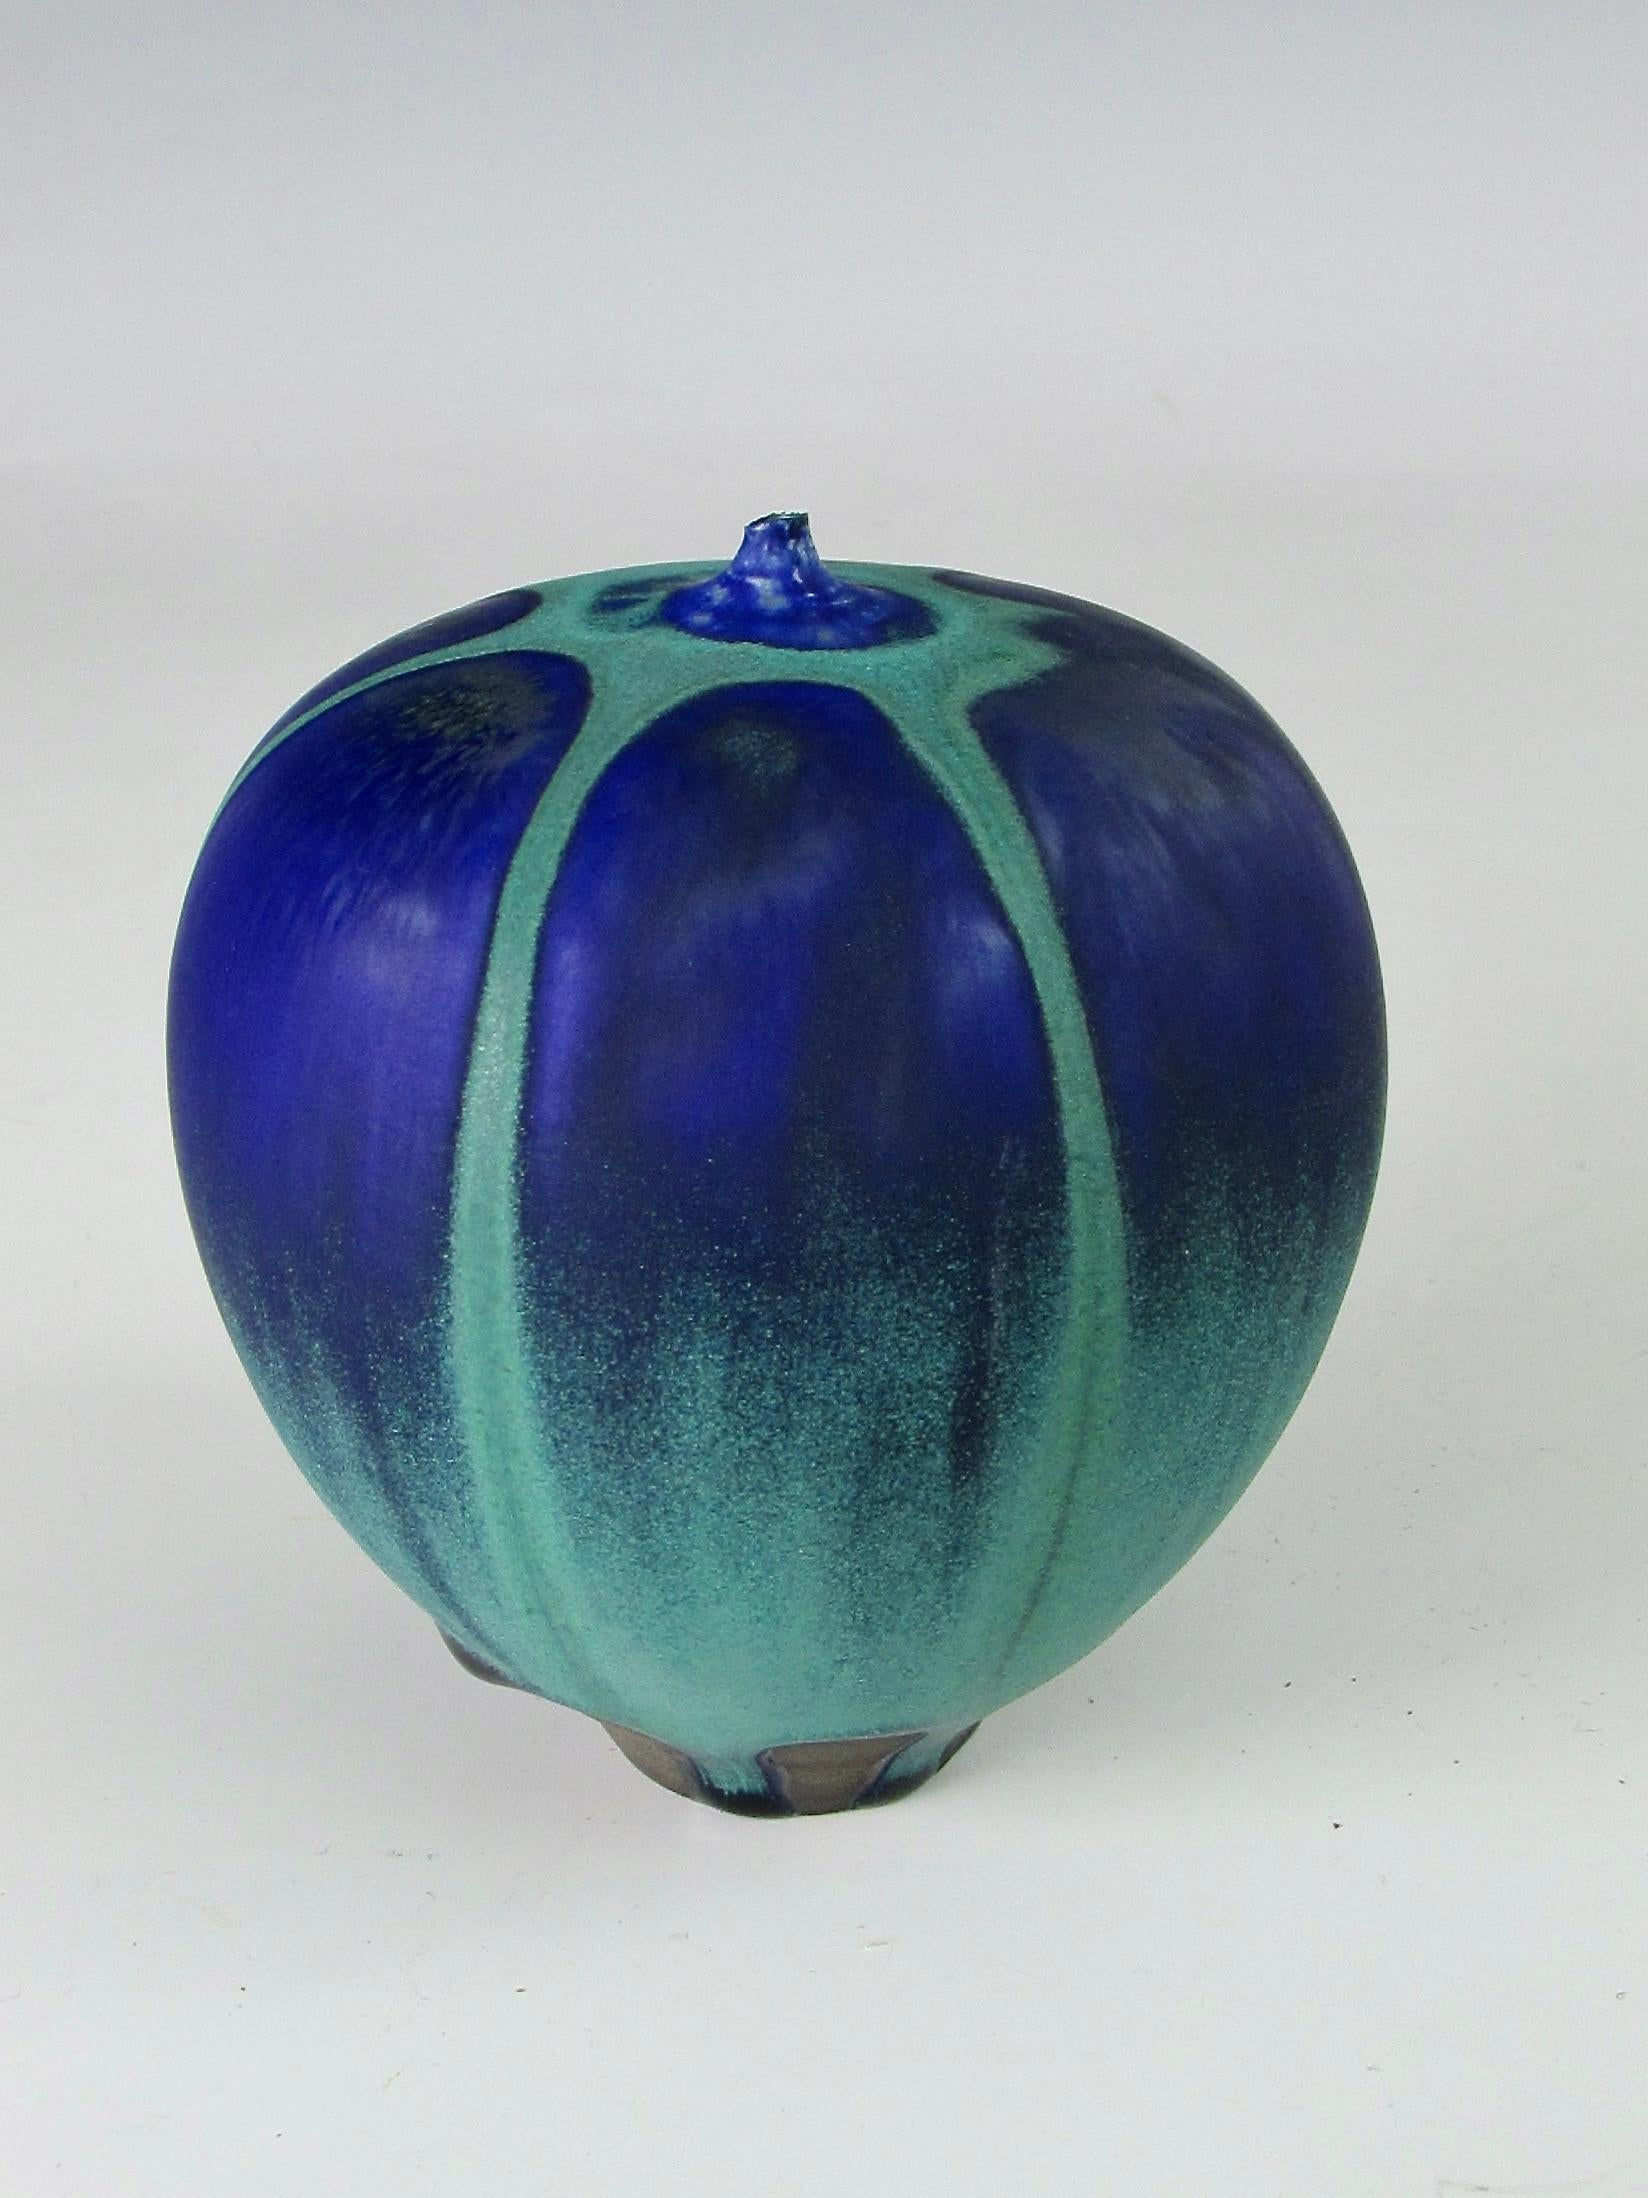  Rose Cabat Tiefblau über Meeresgrün über Meeresgrün  Feelie Vase Unkraut Topf im Angebot 4